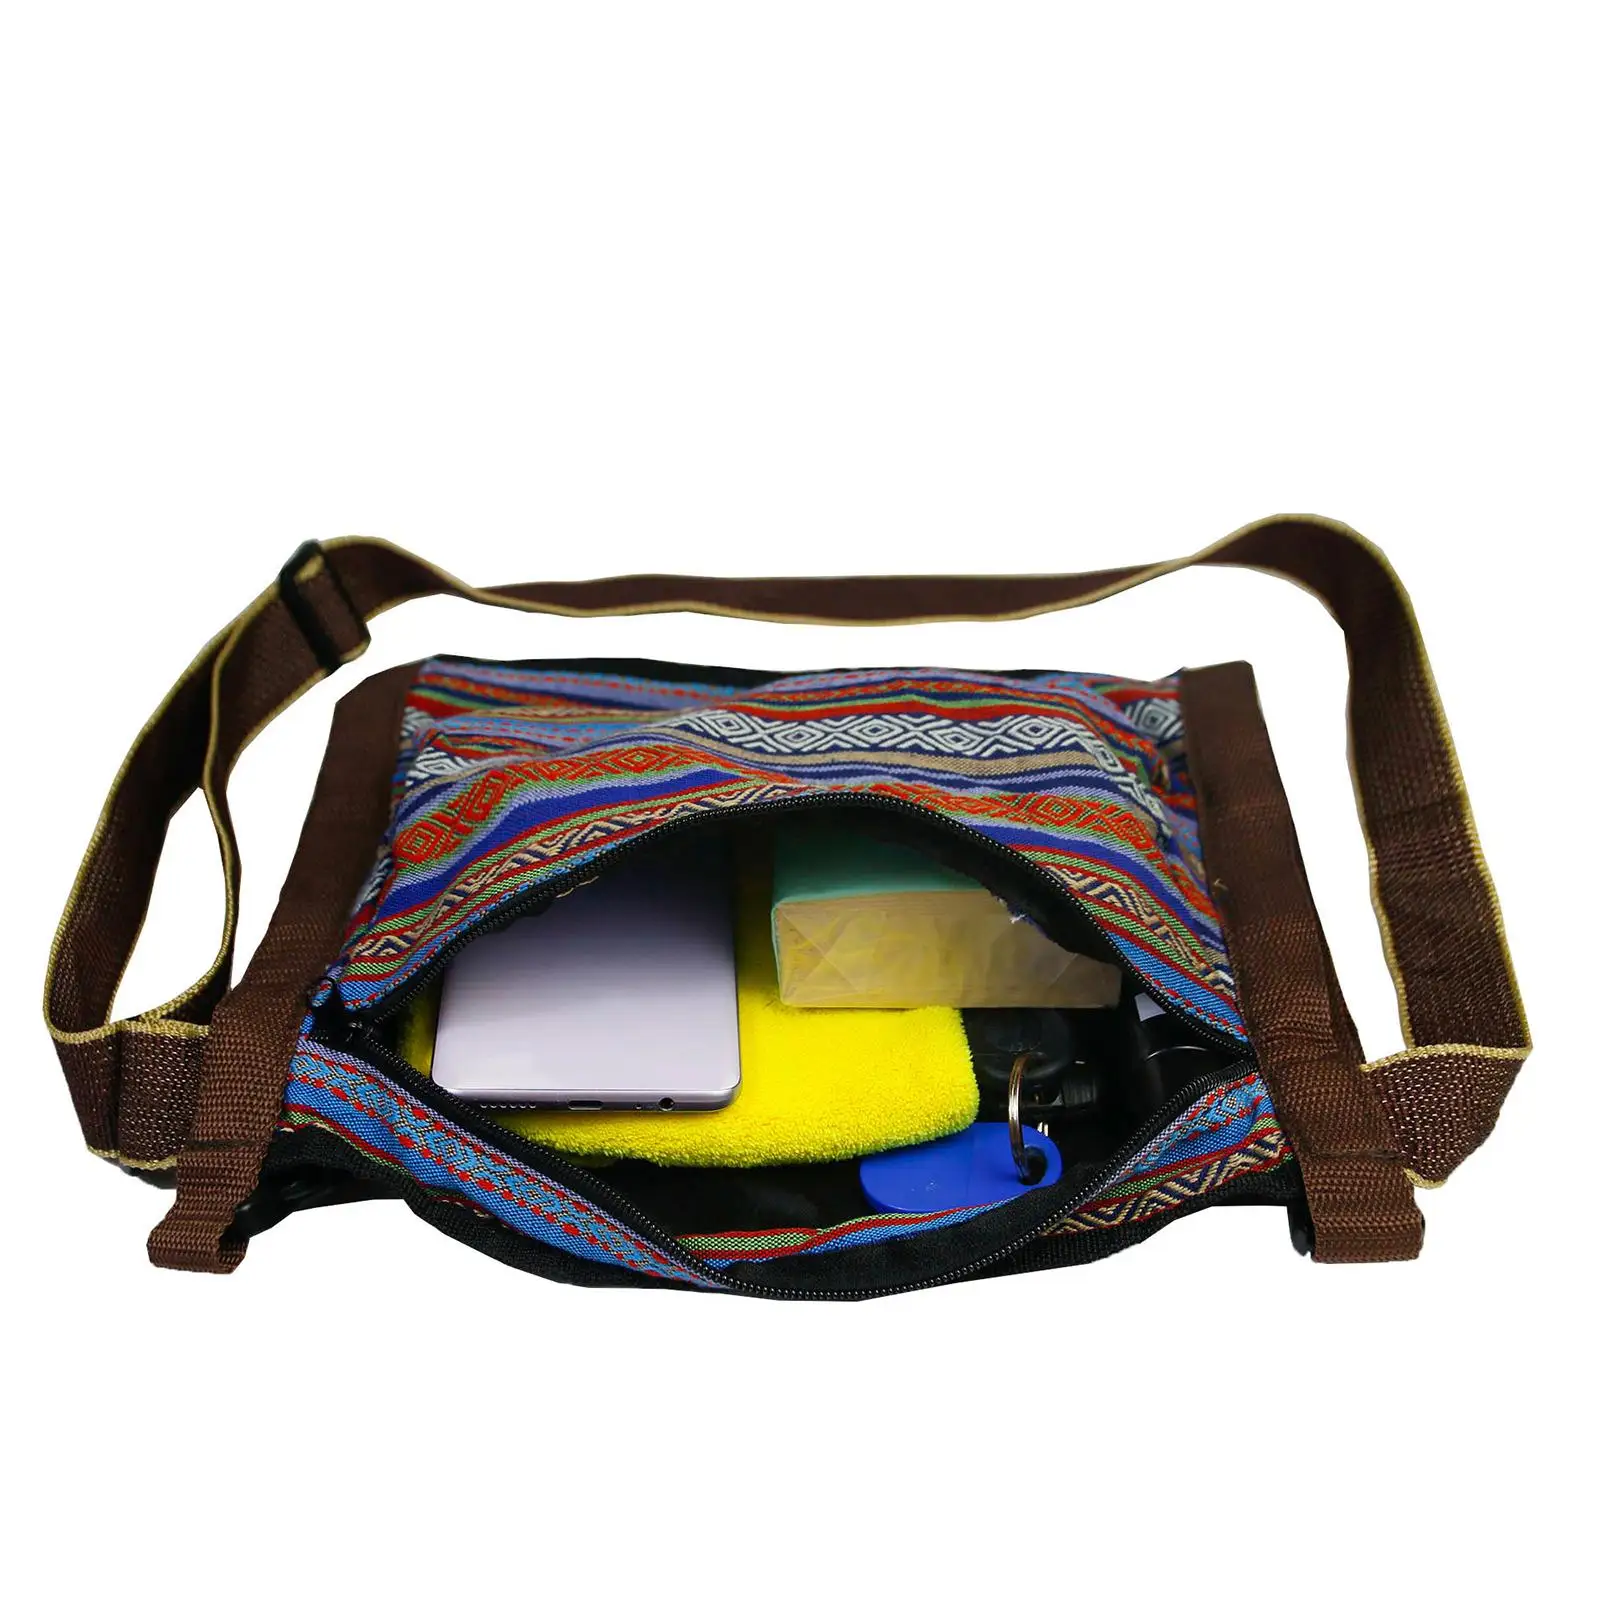 Portable Yoga Mat Bag Gym Adjustable with Pockets Carrier Tote Pilates Storage Handbag for Sports Exercise Travel Fitness